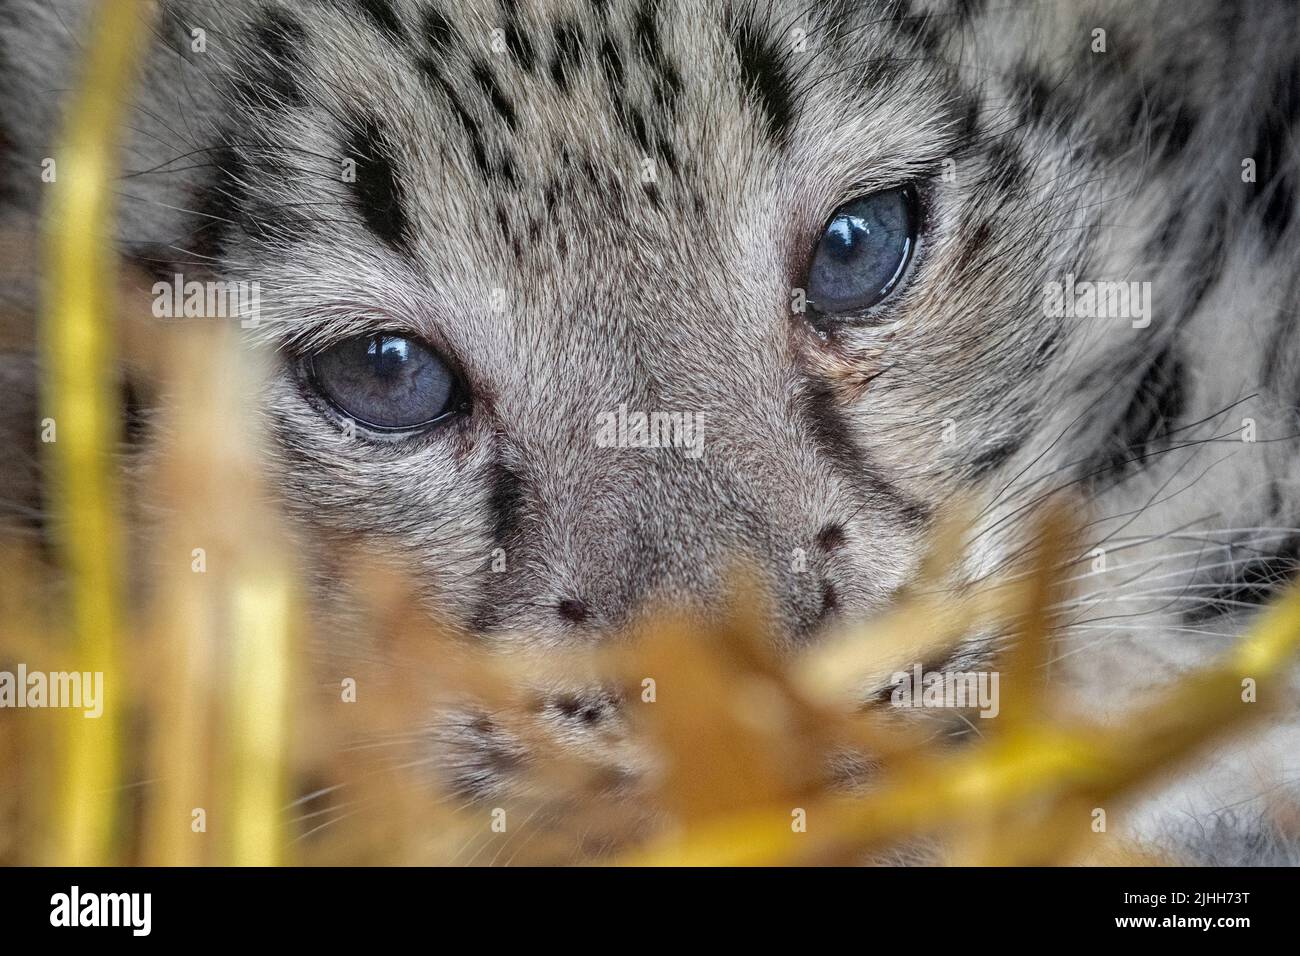 Snow leopard cub looking towards camera (close-up) Stock Photo